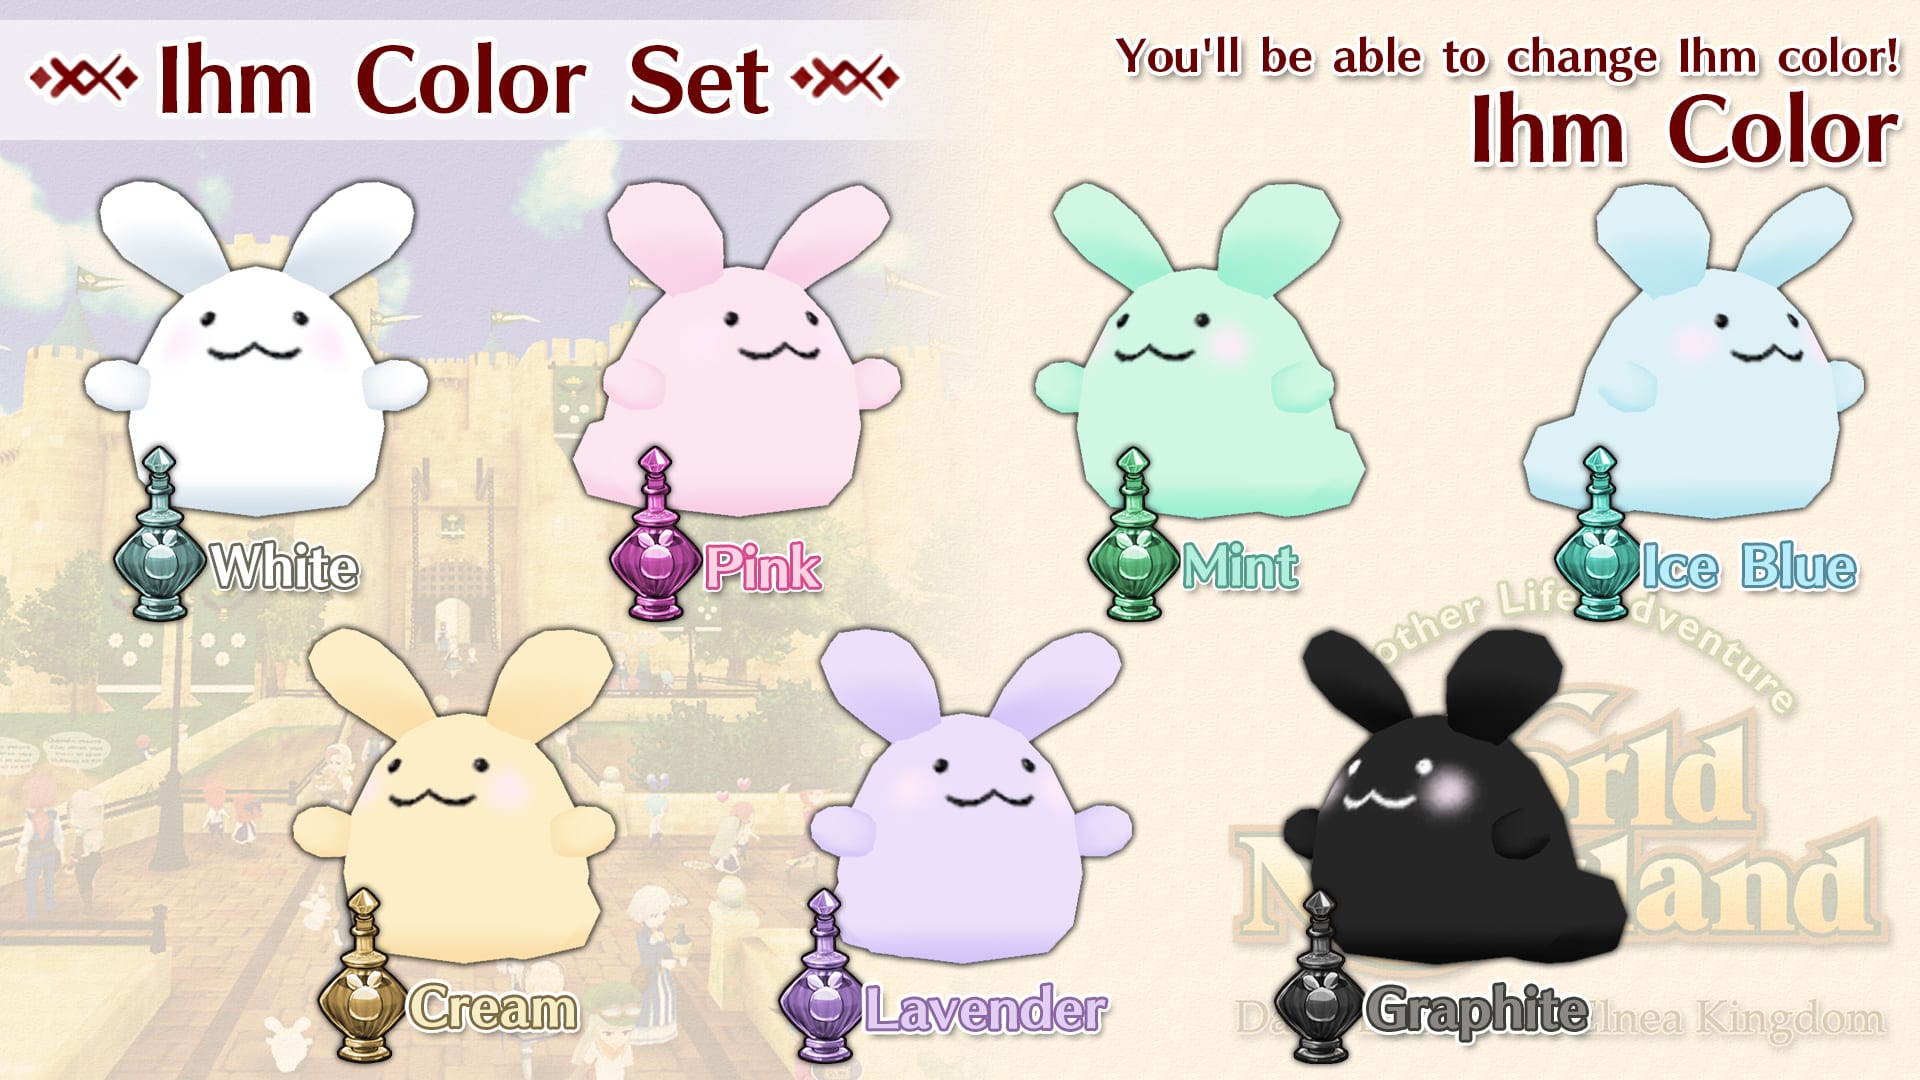 Ihm Color Set (White, Pink, Mint, Ice Blue, Cream, Lavender, Graphite)